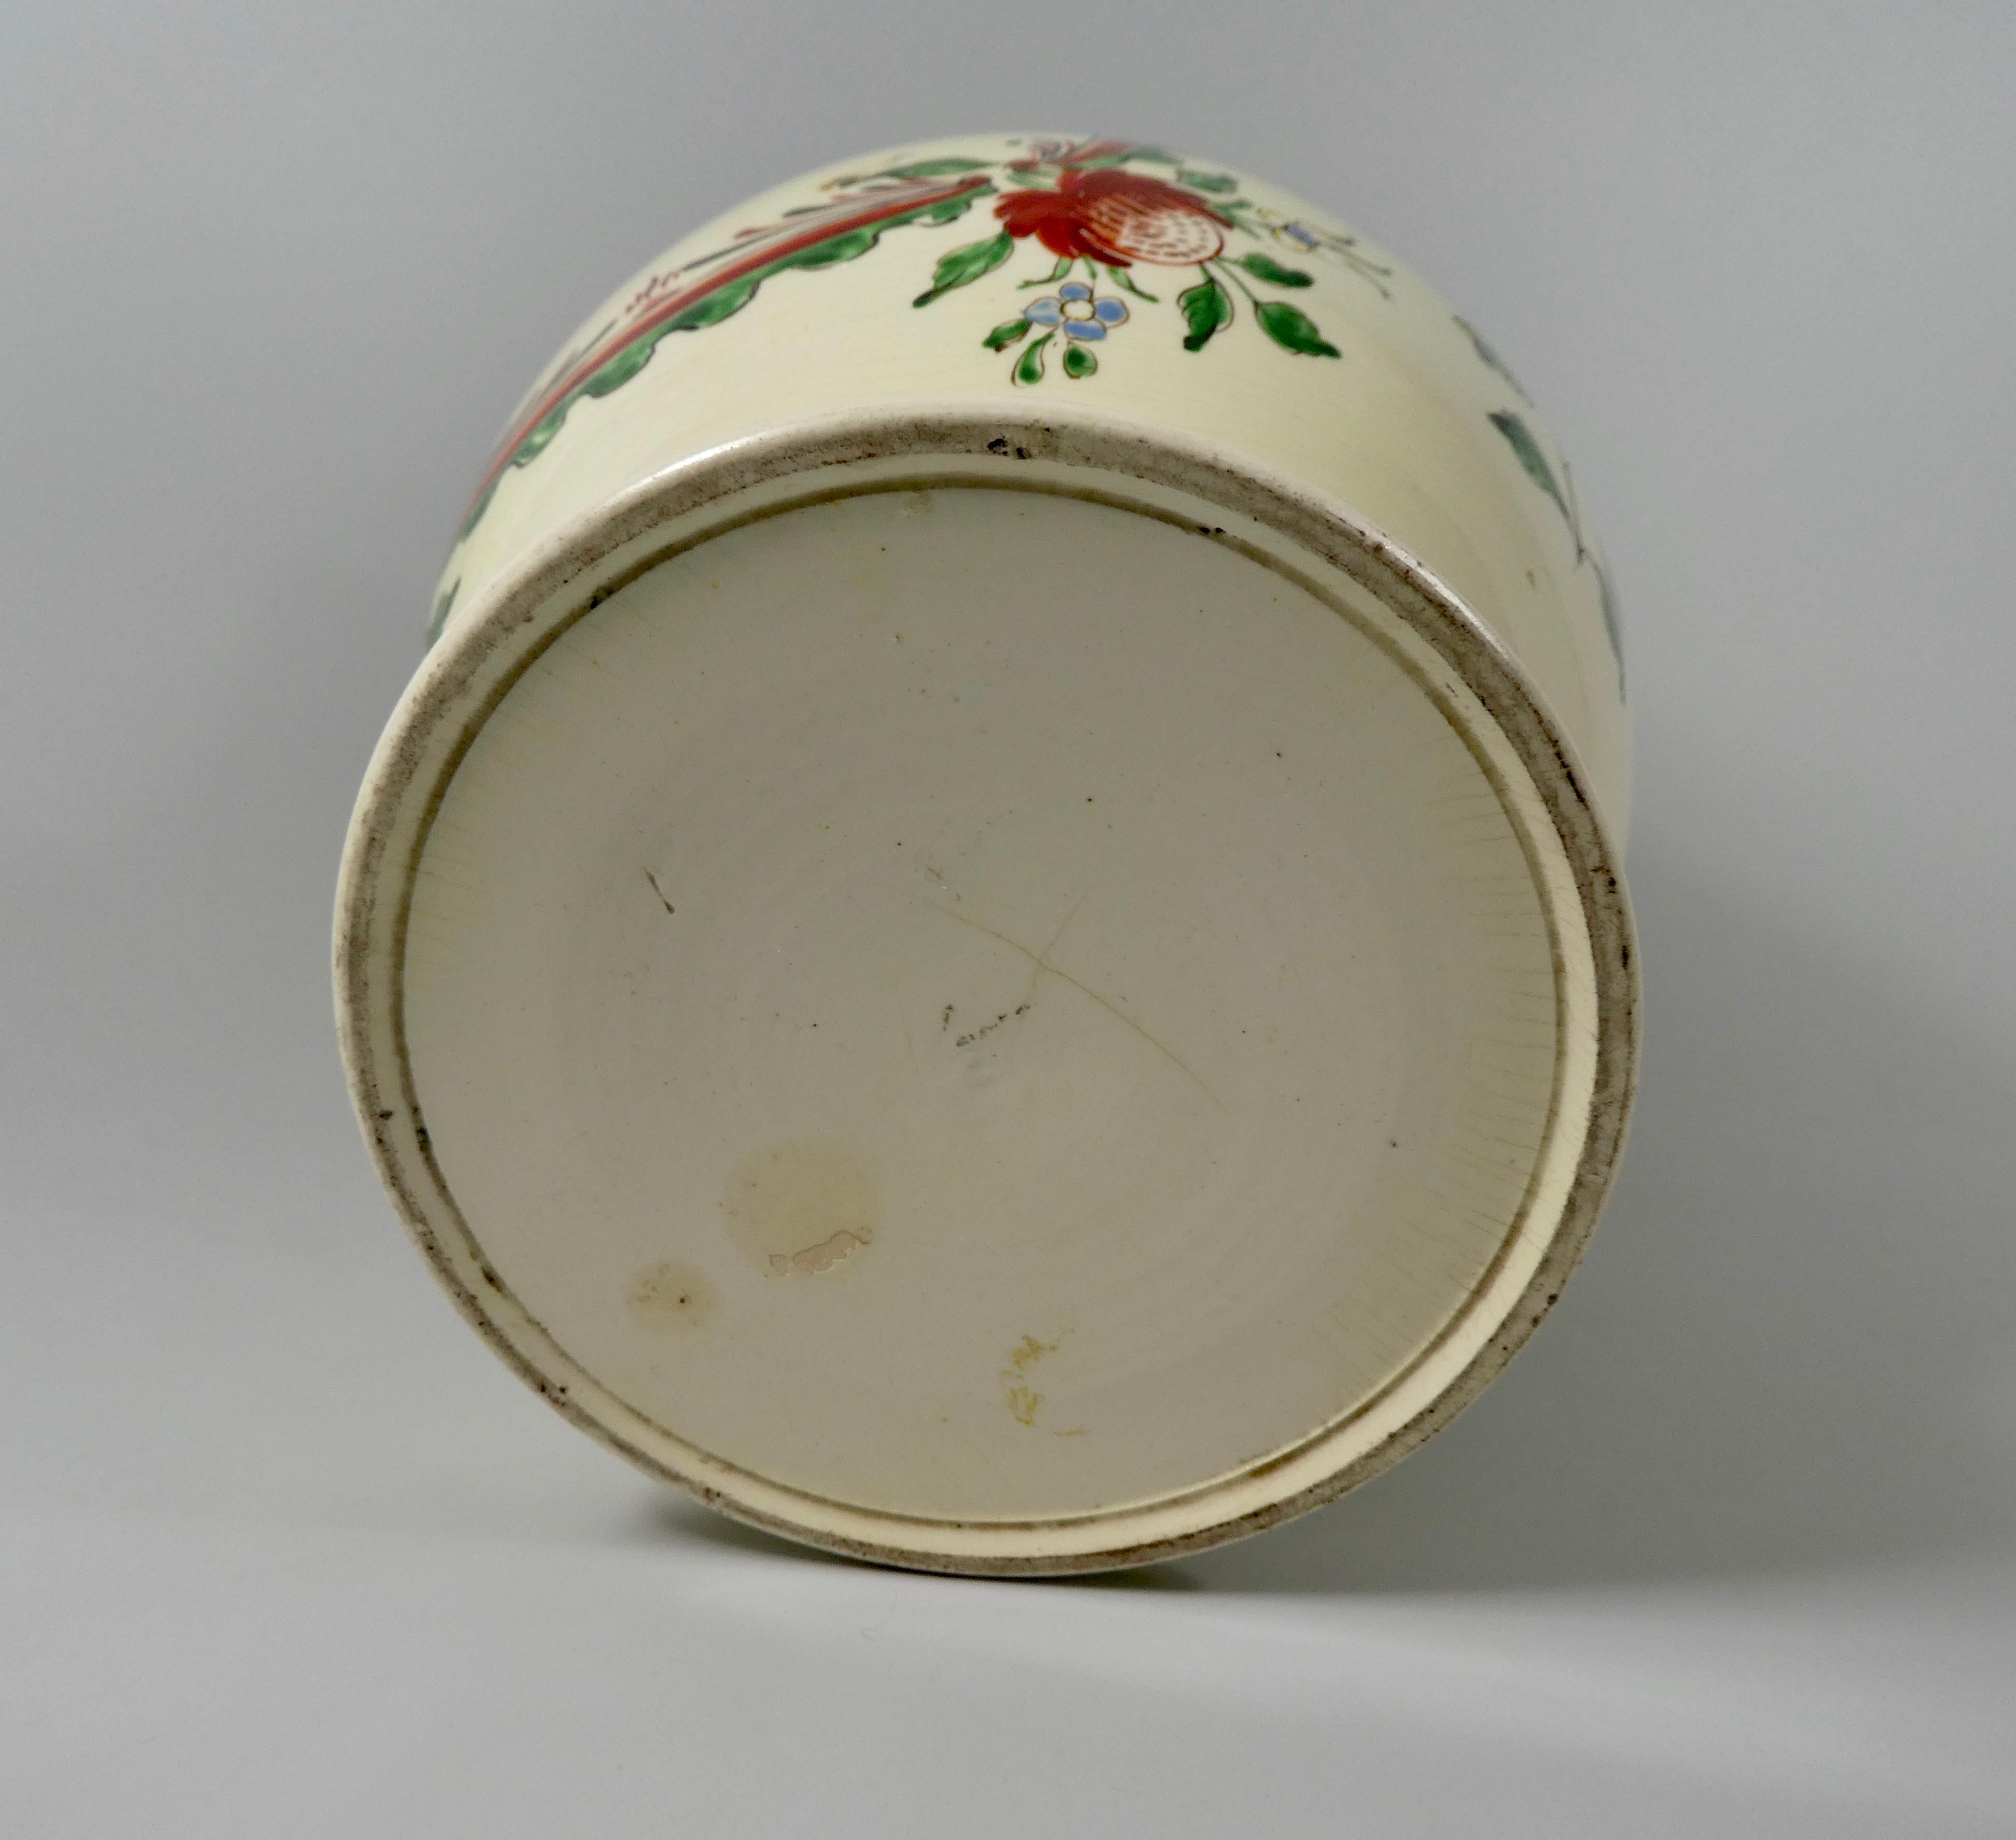 Leeds creamware jug, John Pickford, 1773. 2